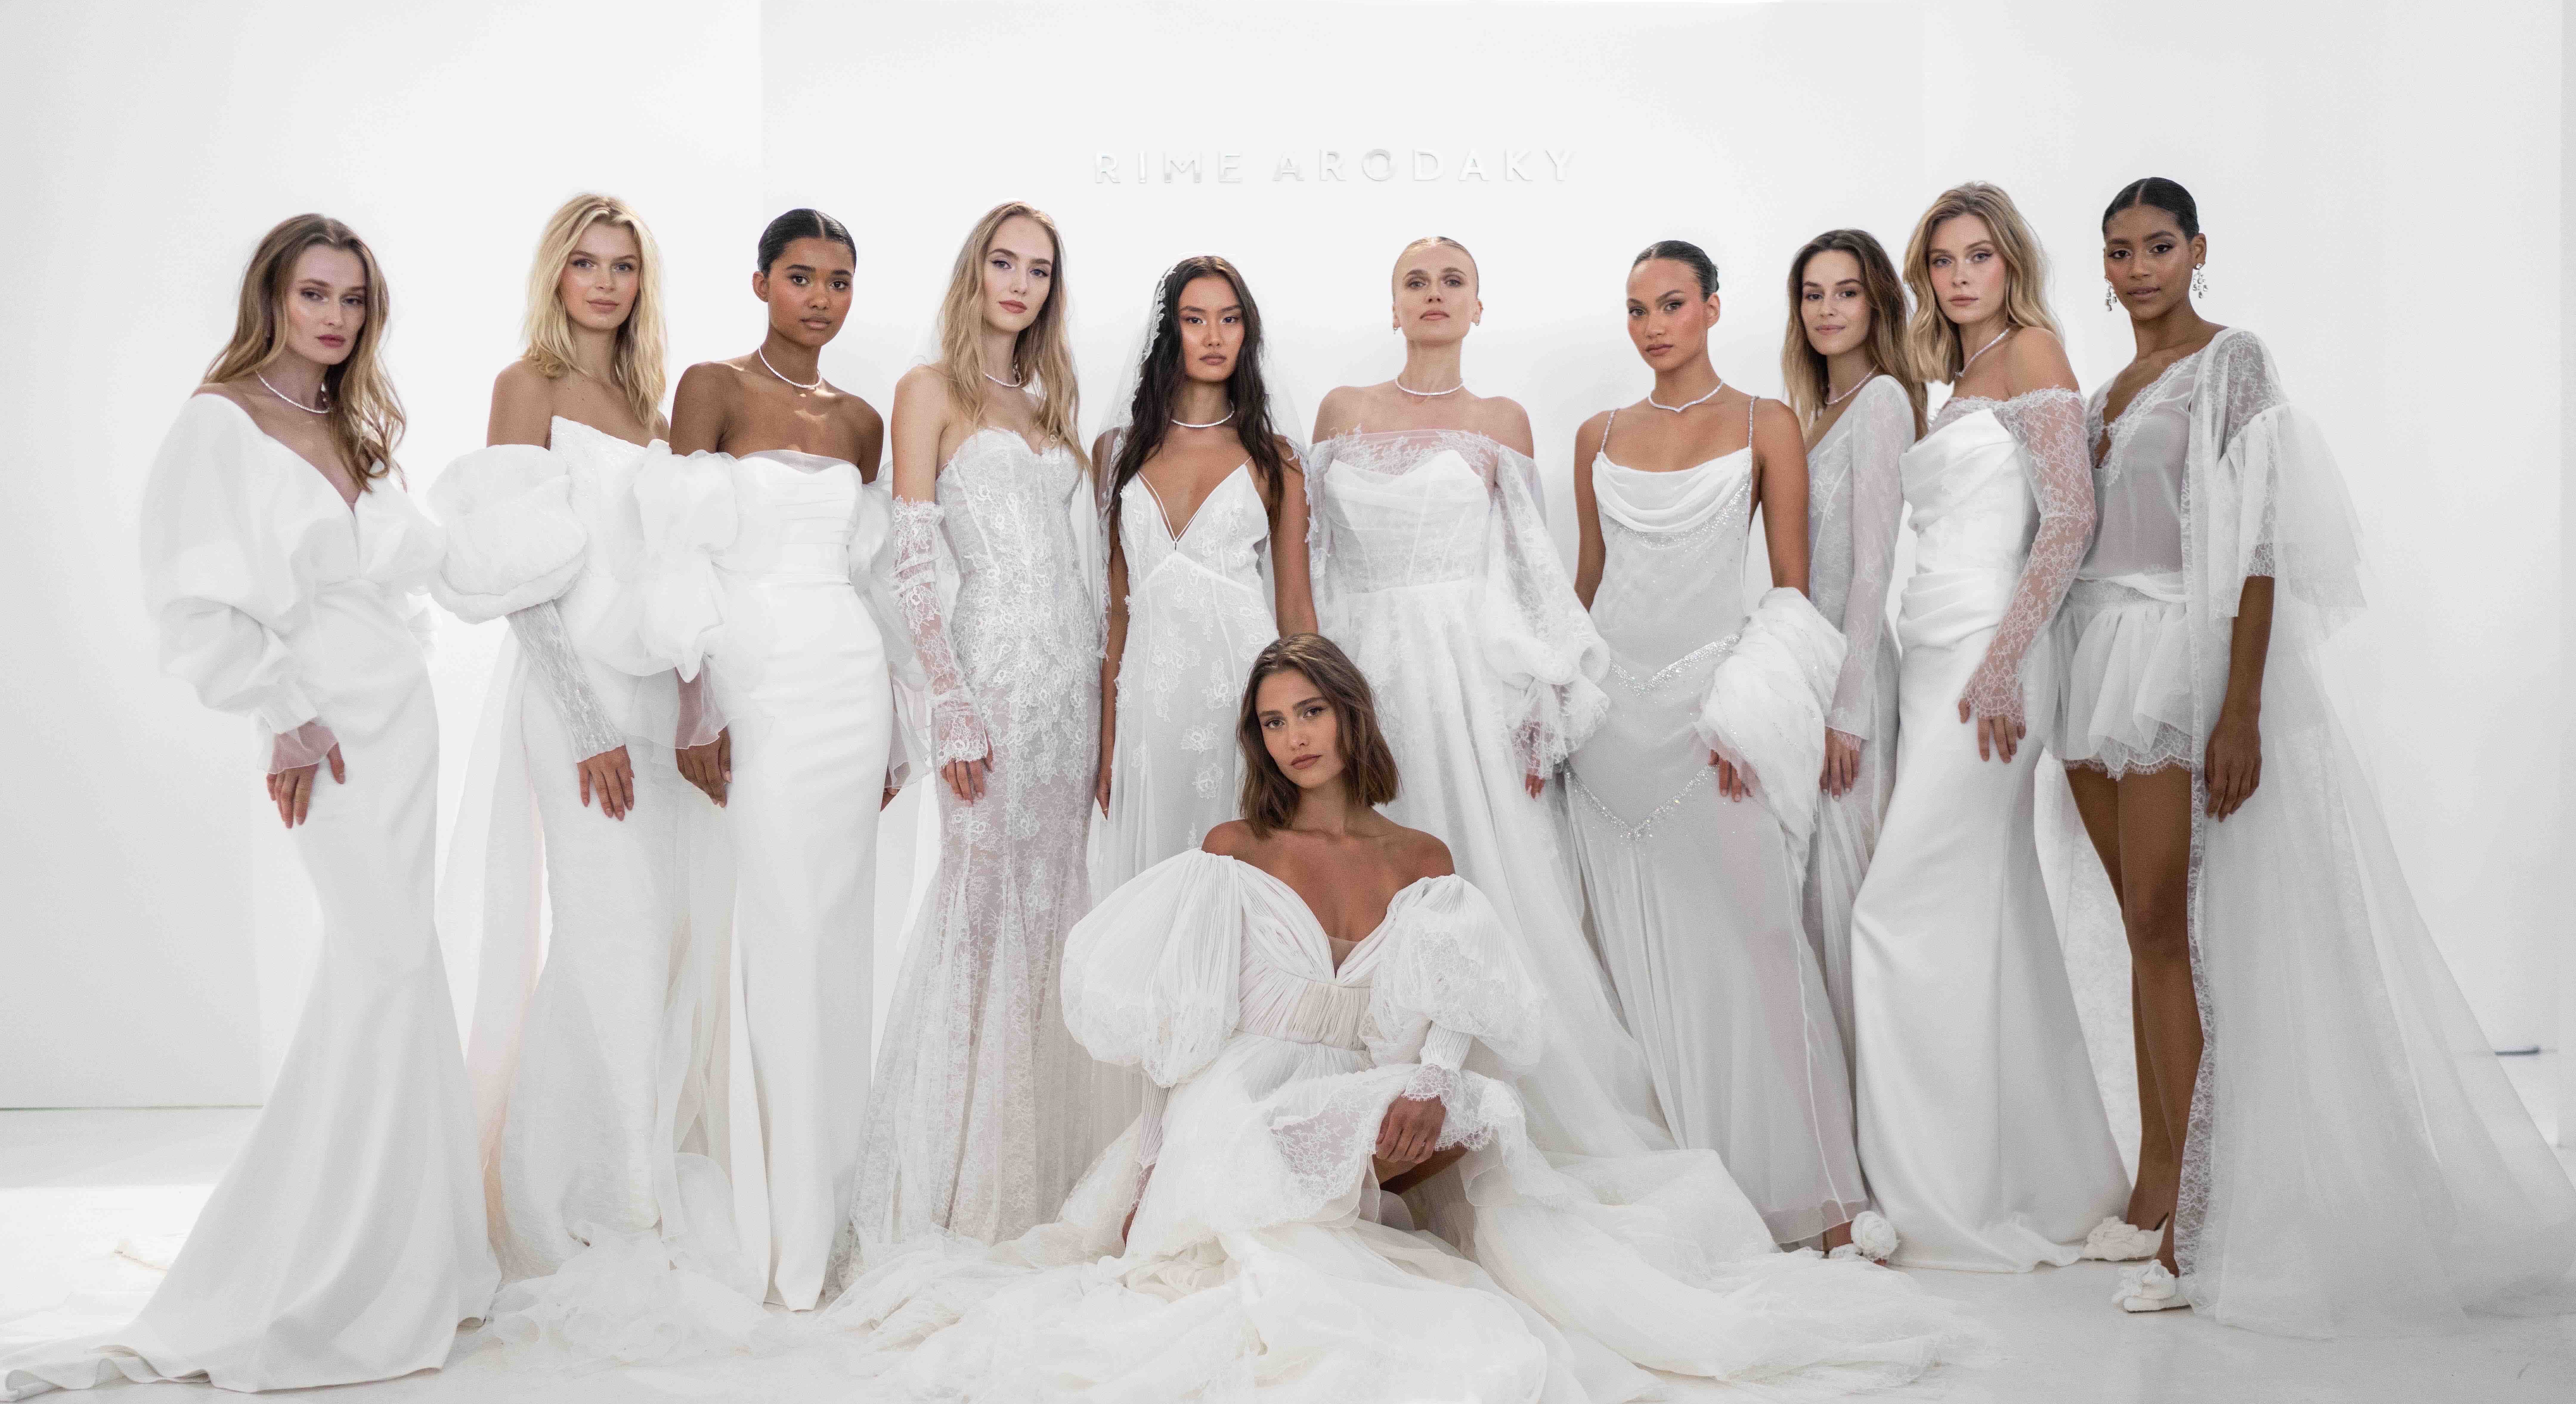 A group of models for Rime Arodaky at New York Bridal Fashion Week.